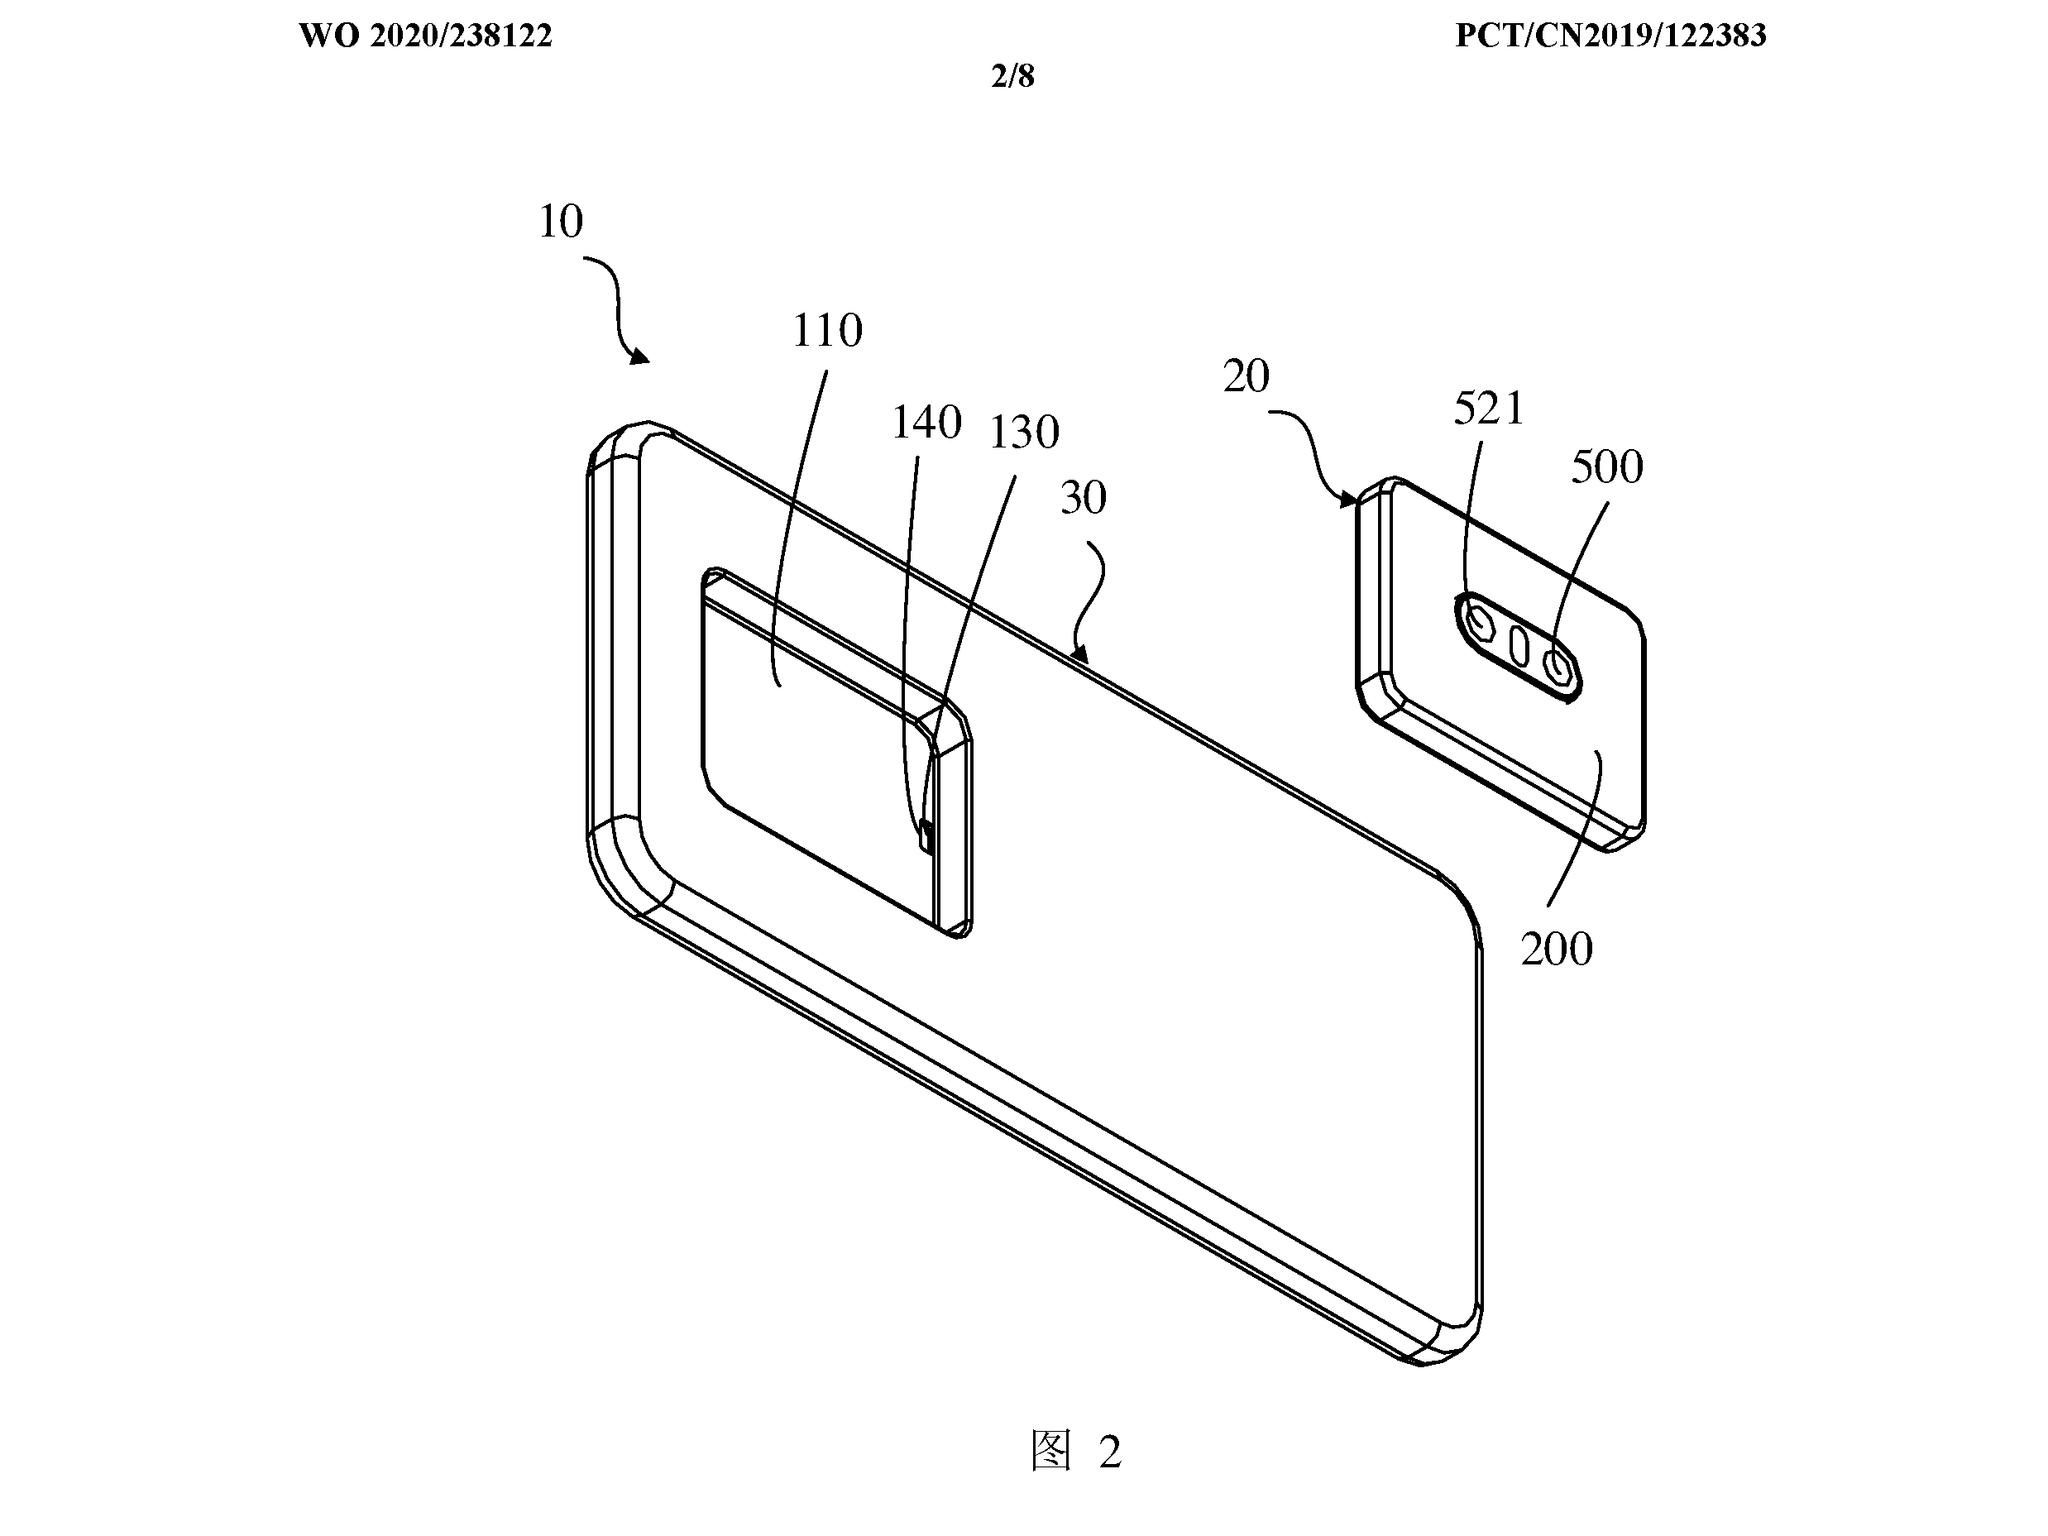 Oppo Modular Camera Patent